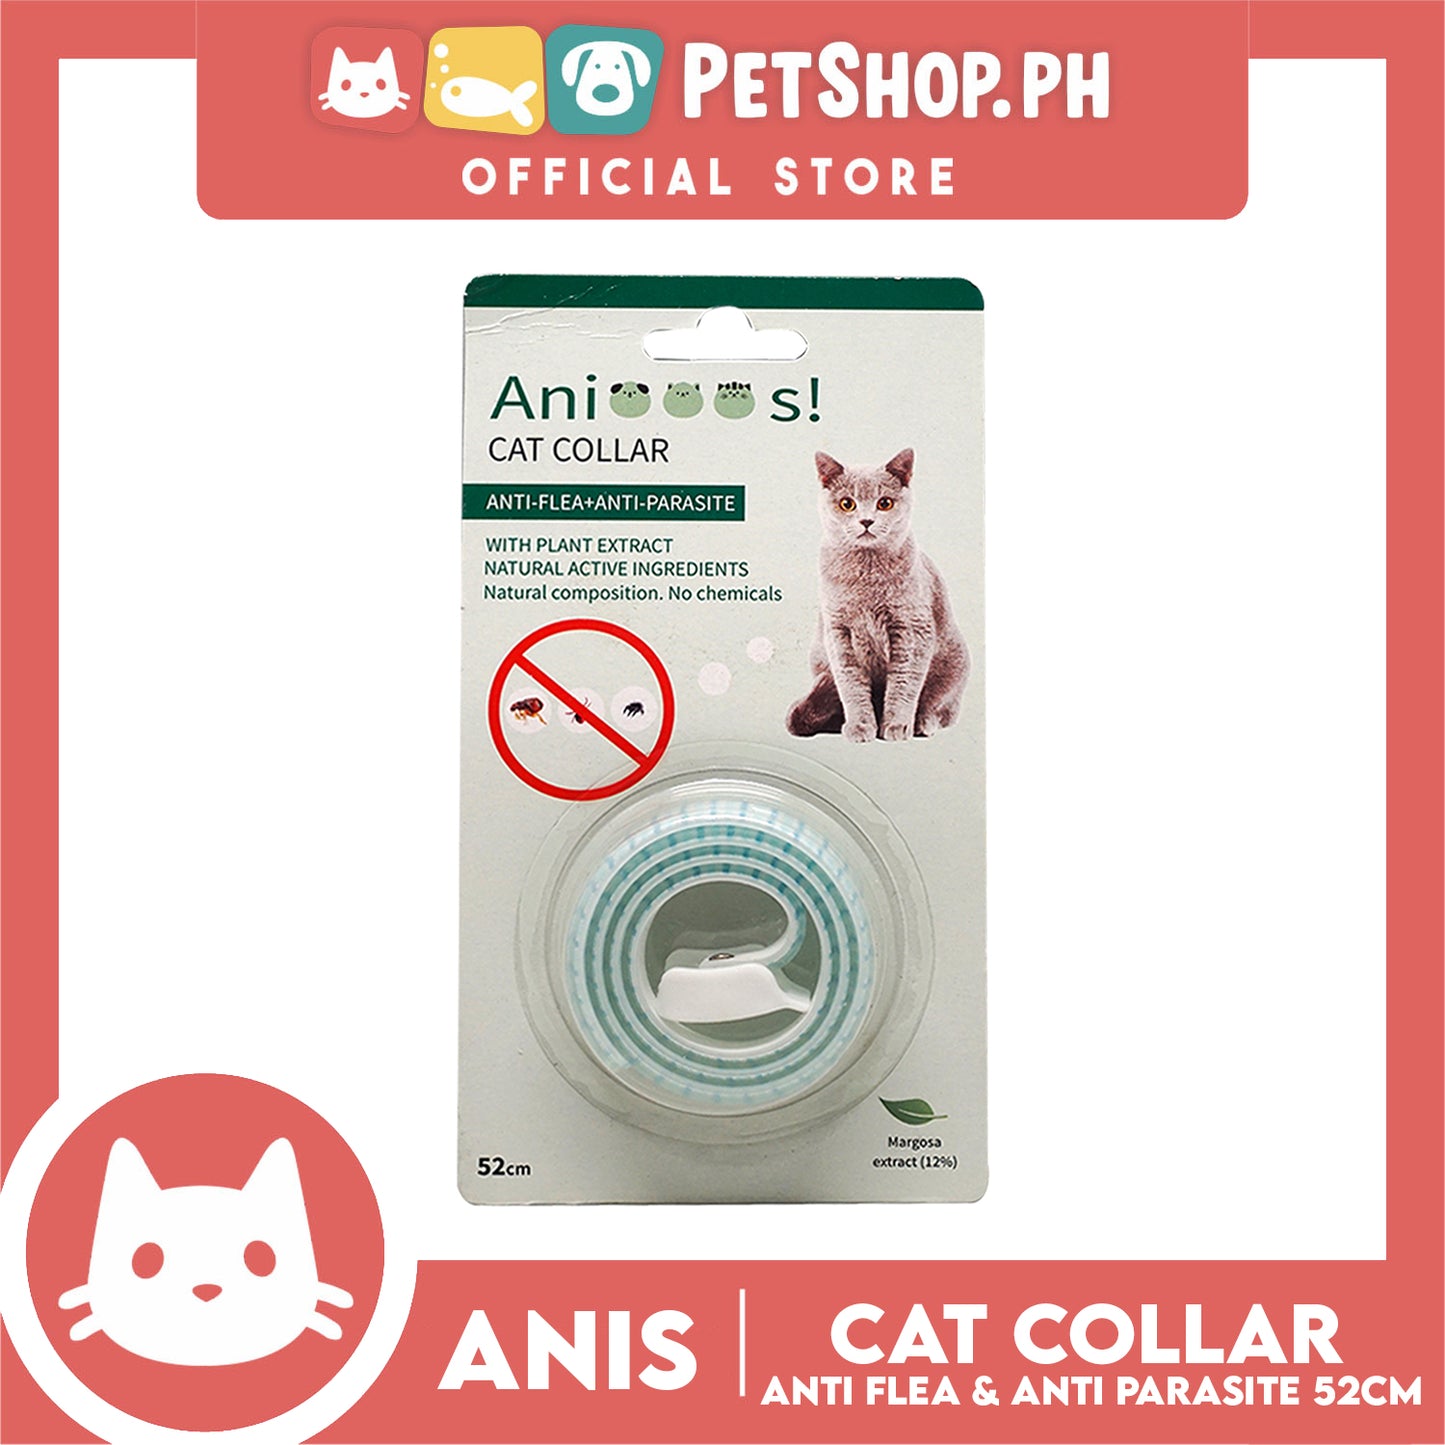 Adjustable Cat Collar Anti-Flea and Anti-Parasite 52cm with 12% Margosa Extract Flea C6713 (Blue)